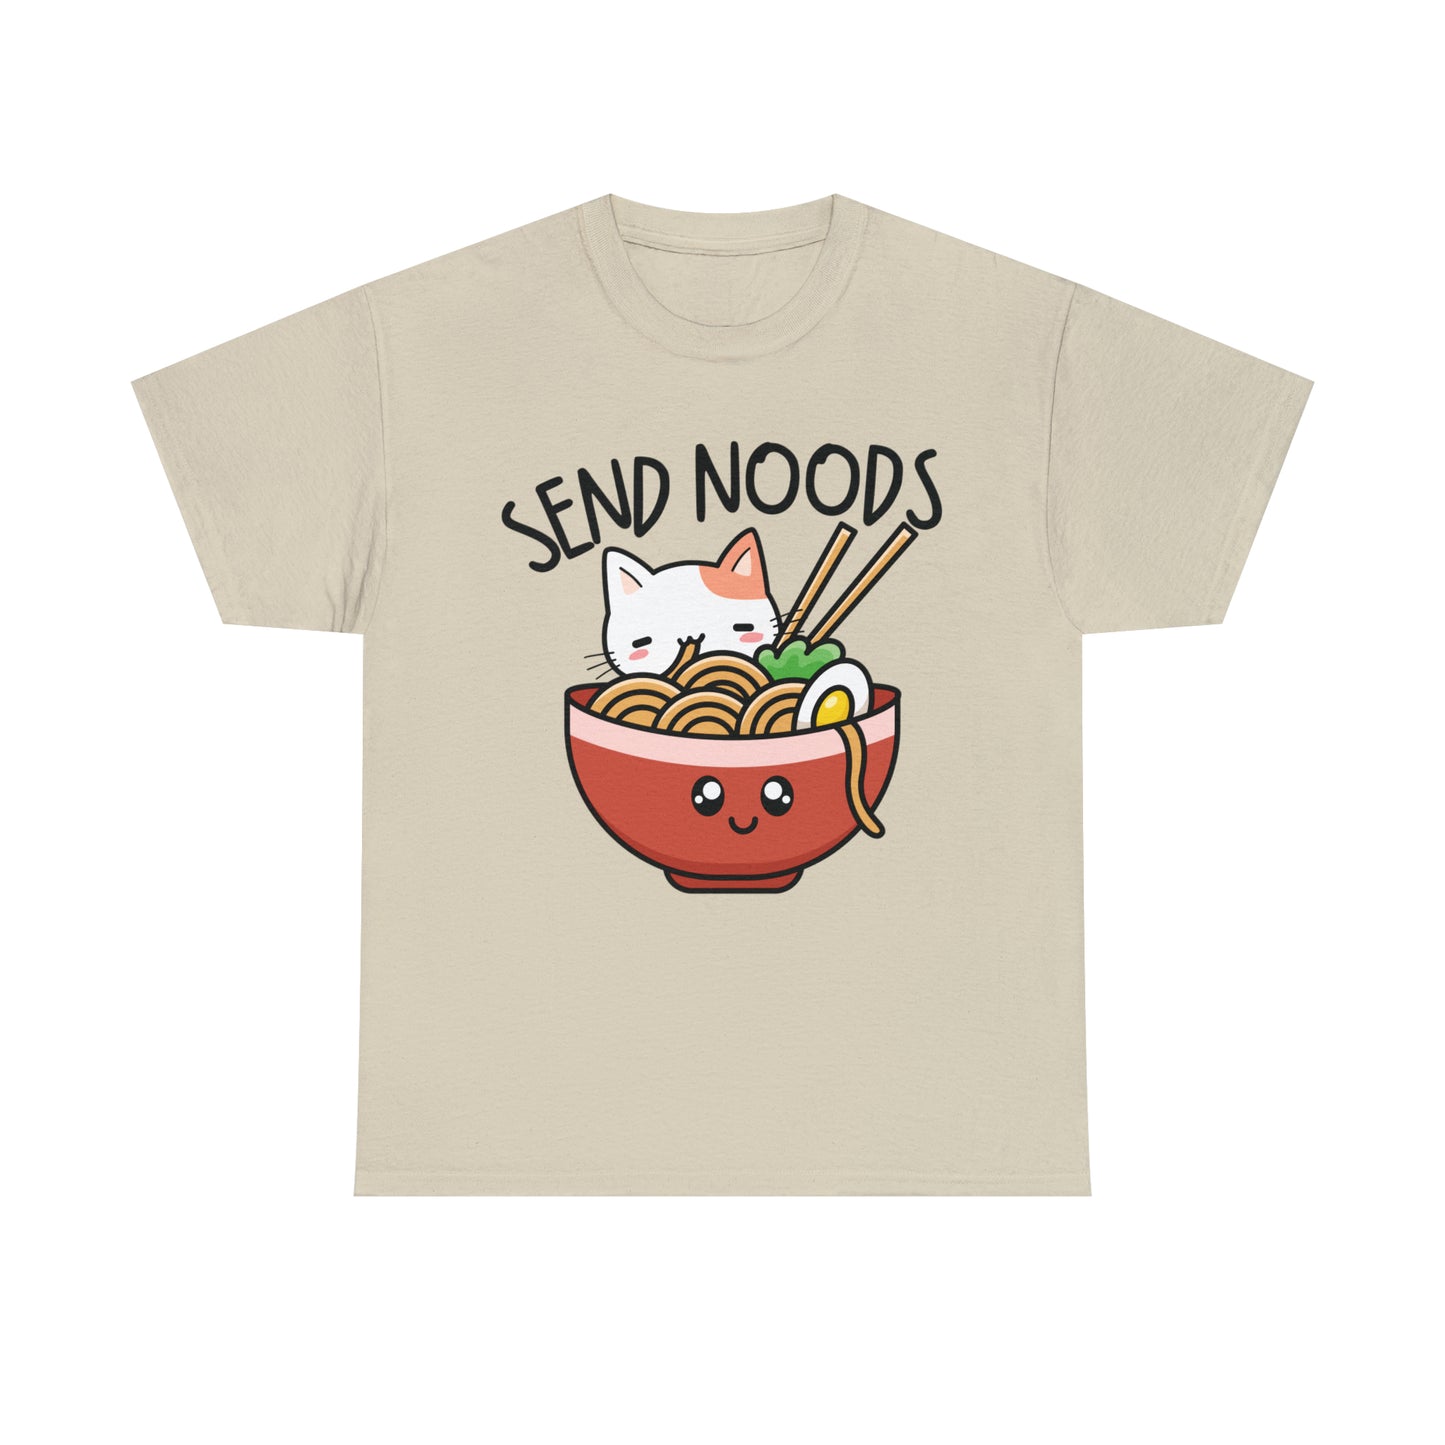 Send Noods!